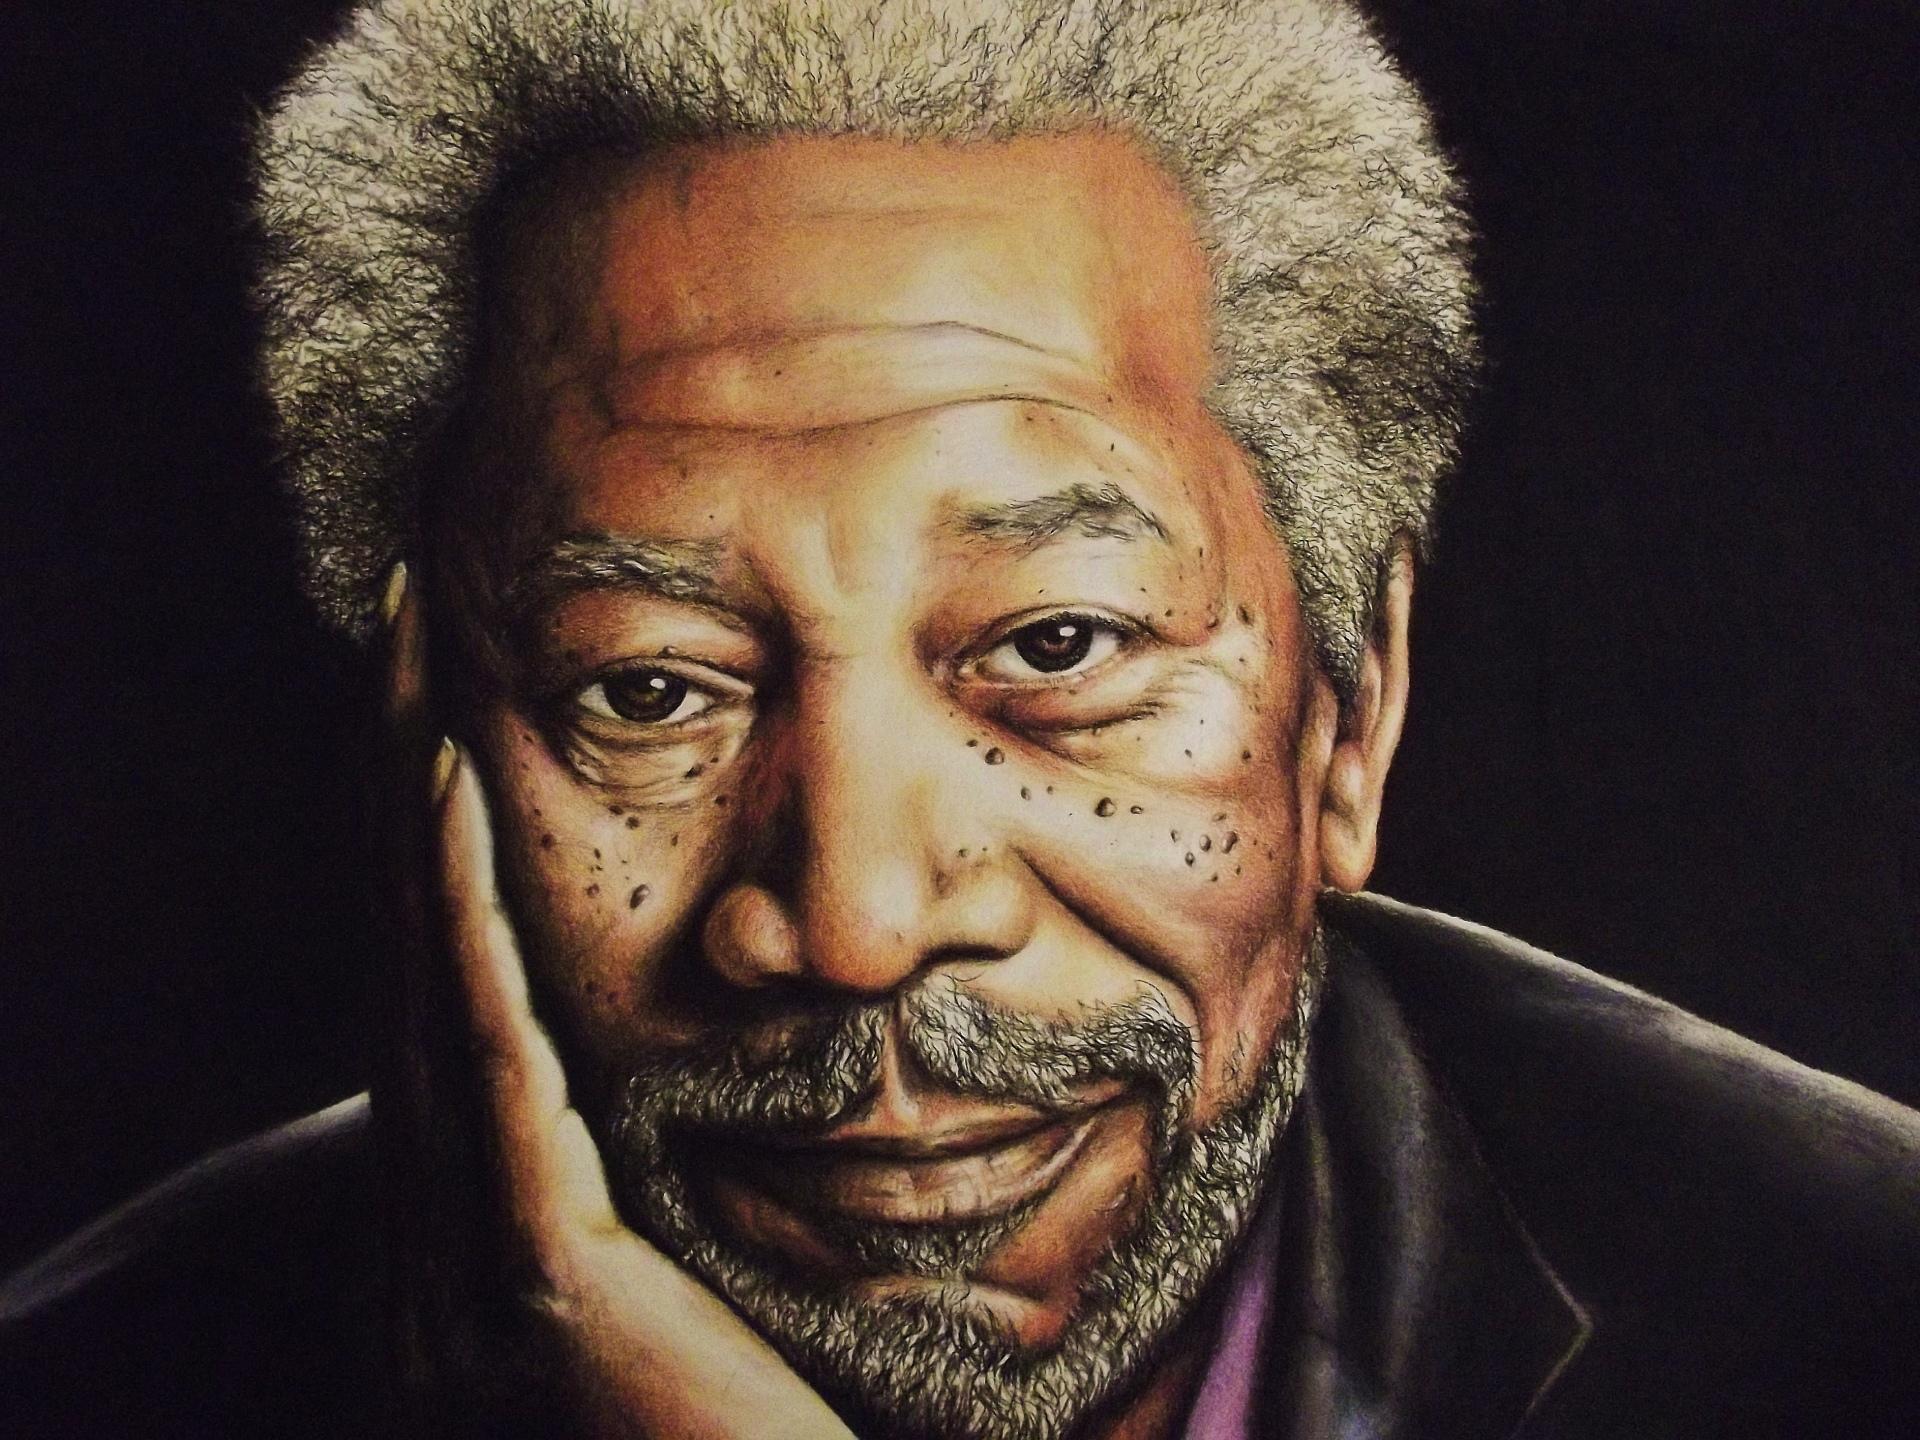 Morgan Freeman at 2048 x 2048 iPad size wallpapers HD quality